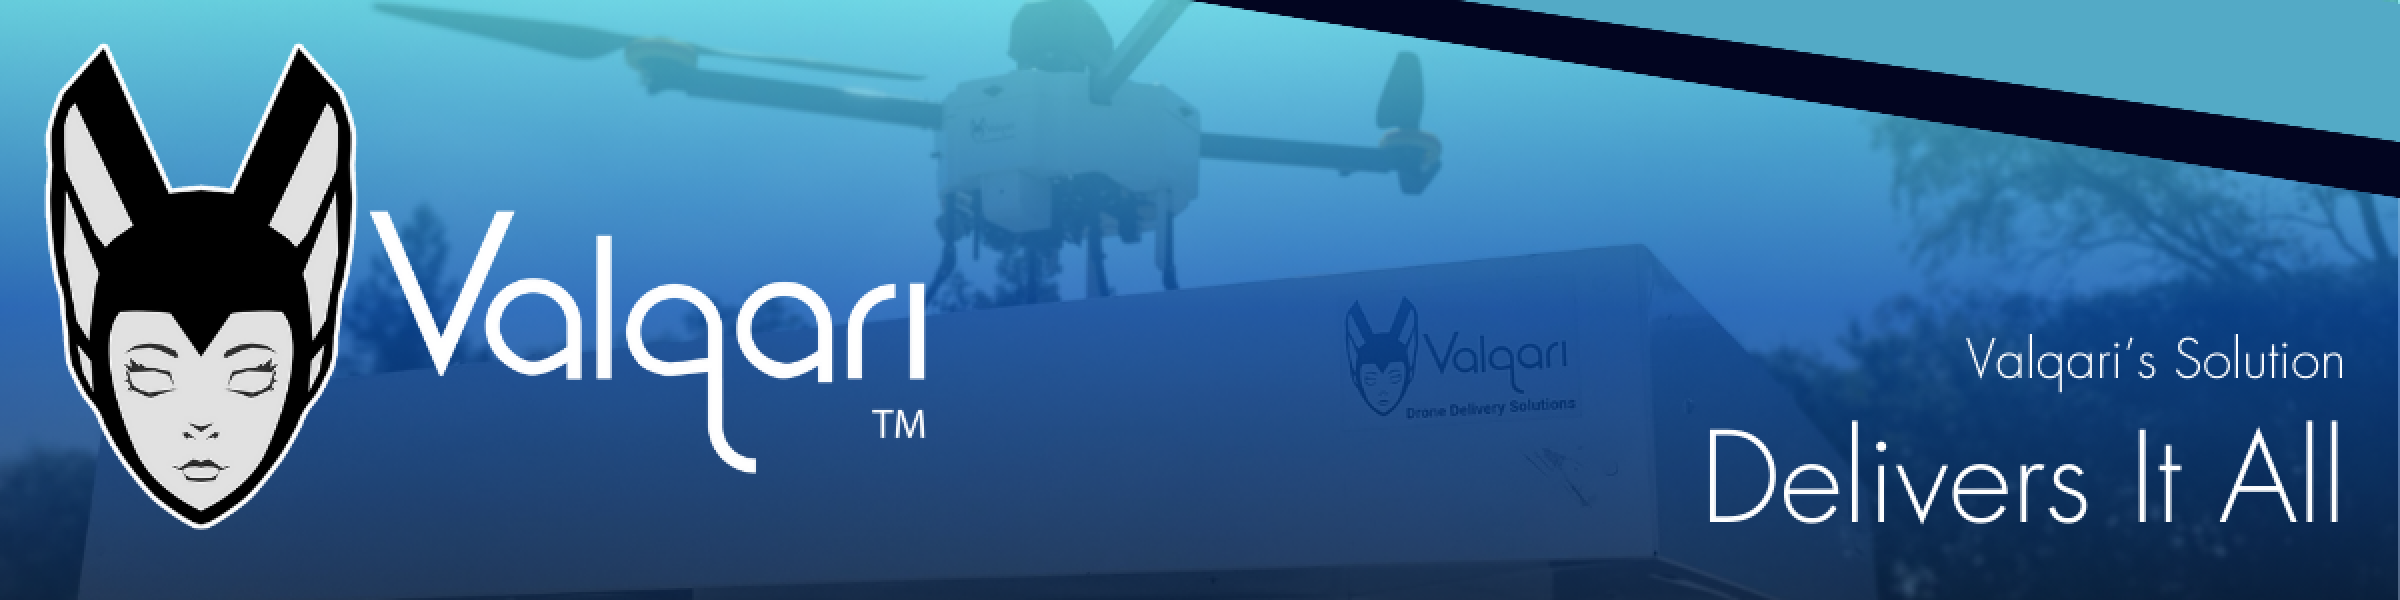 Valqari_Logo_Drone Major